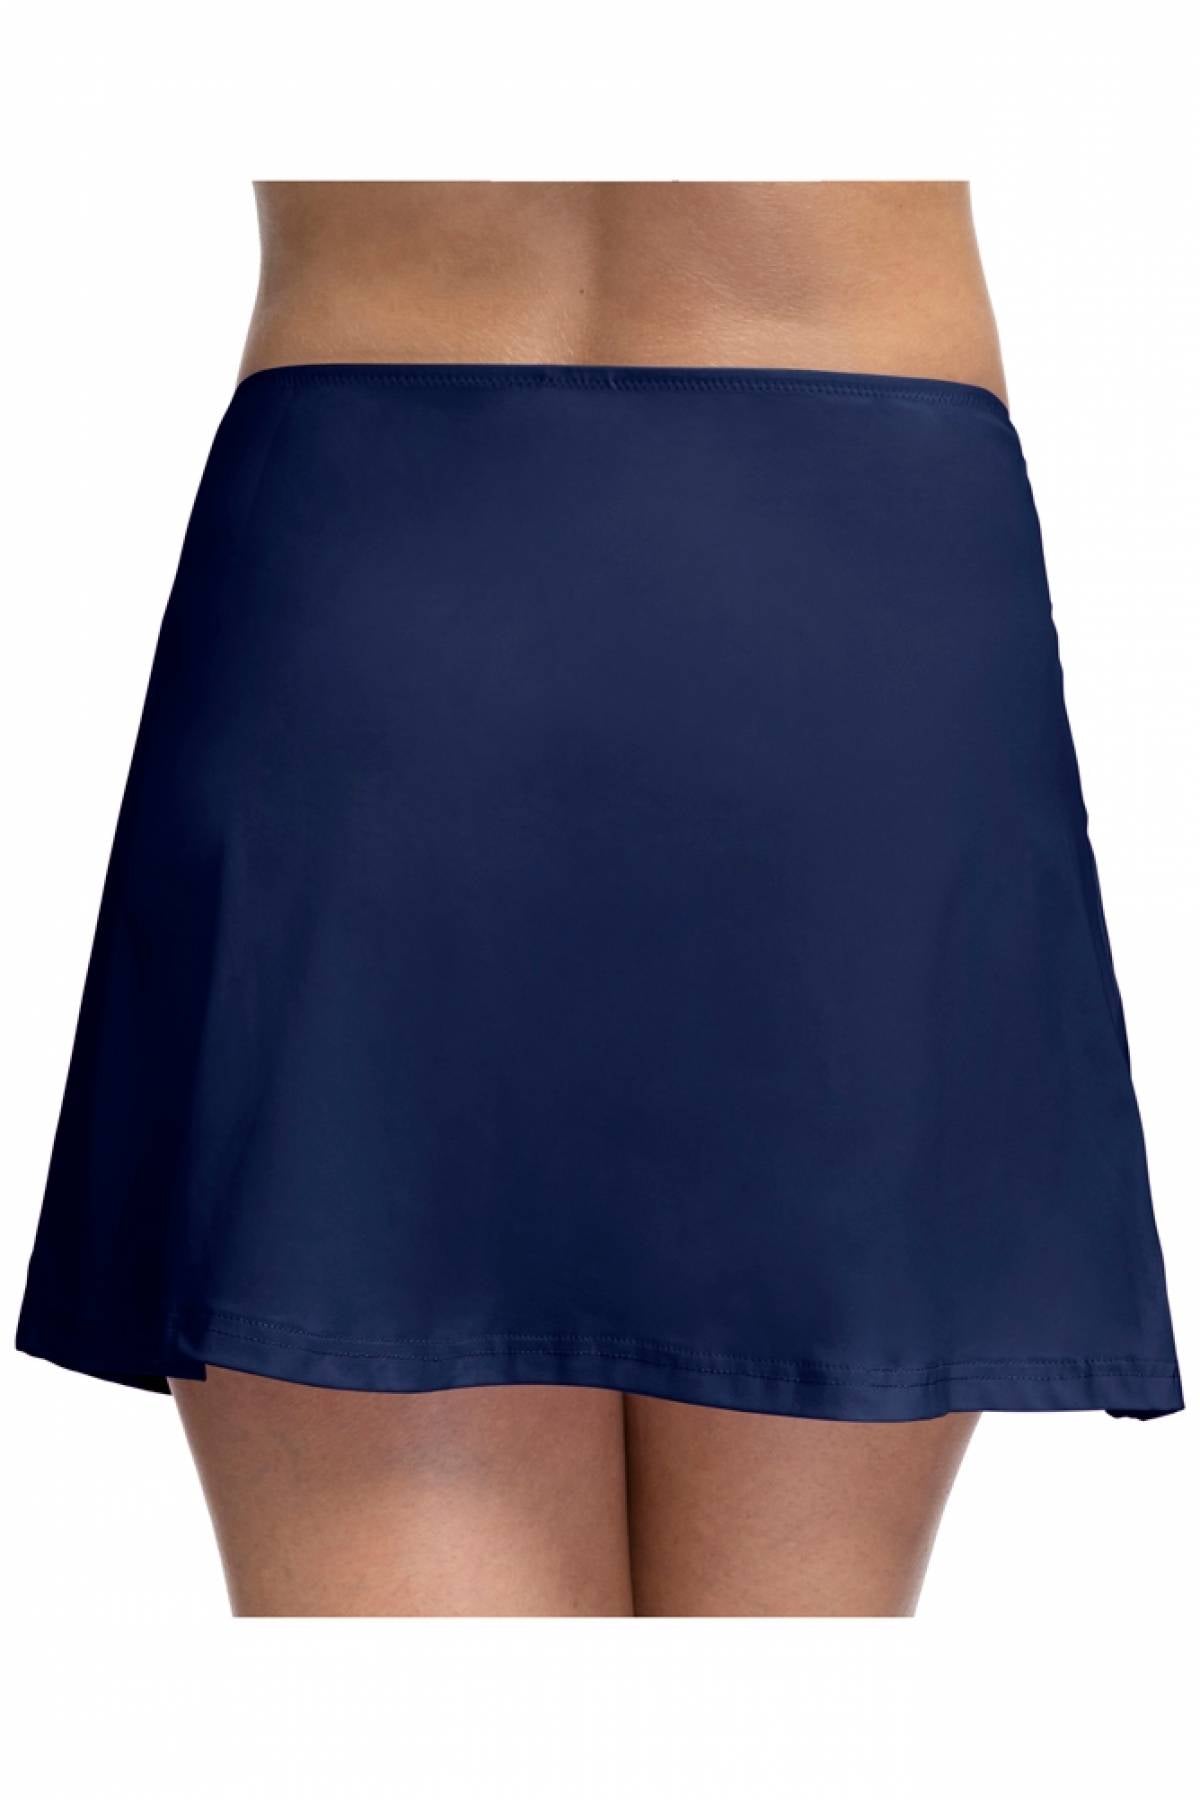 Profile by Gottex Tutti Frutti Cover Up Skirt (6565325570113)